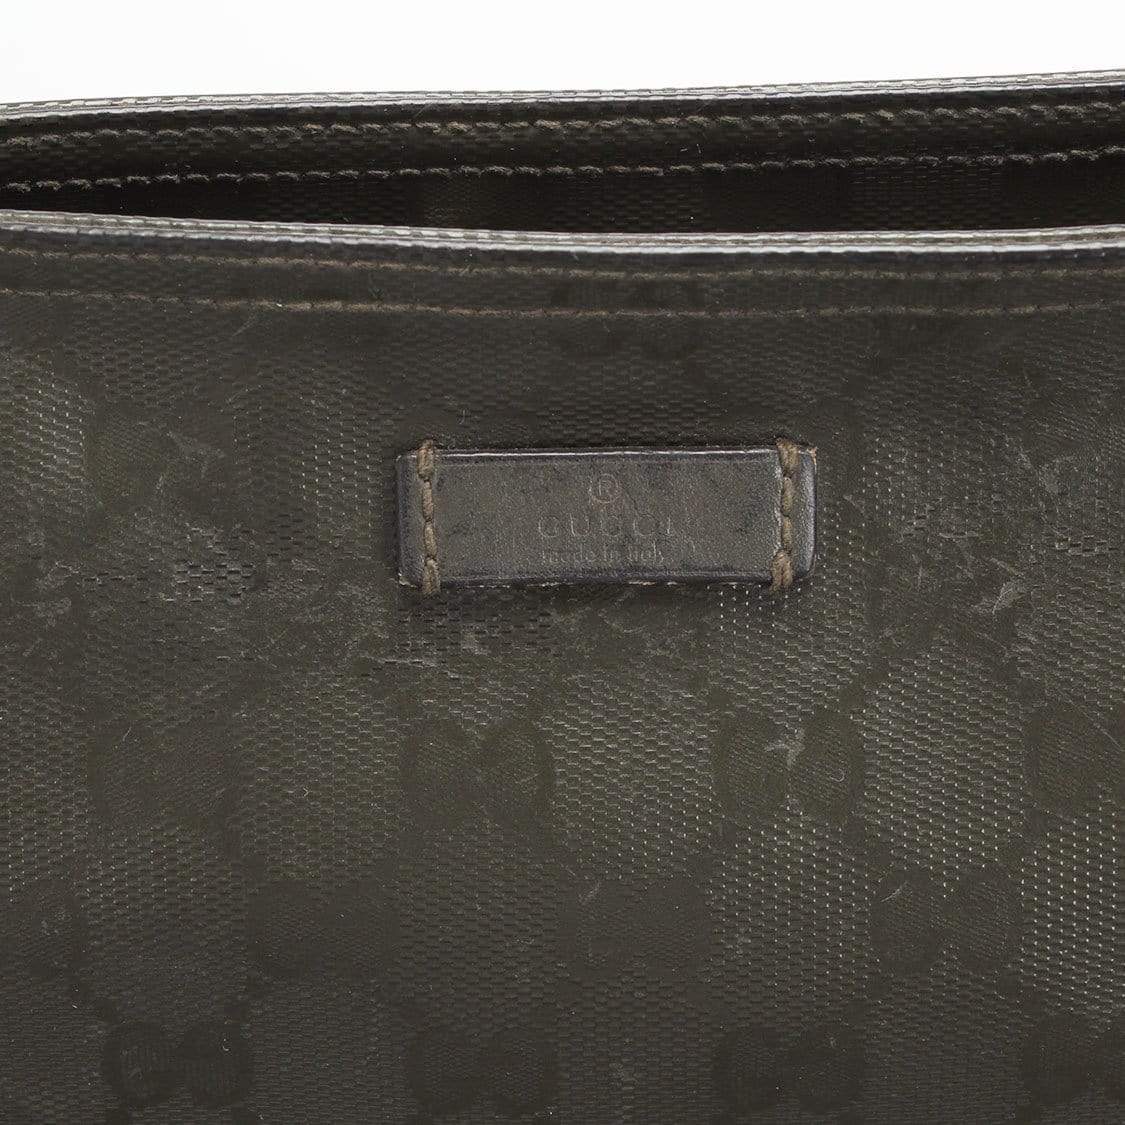 Goyard Gucci GG Imprime Crossbody Bag